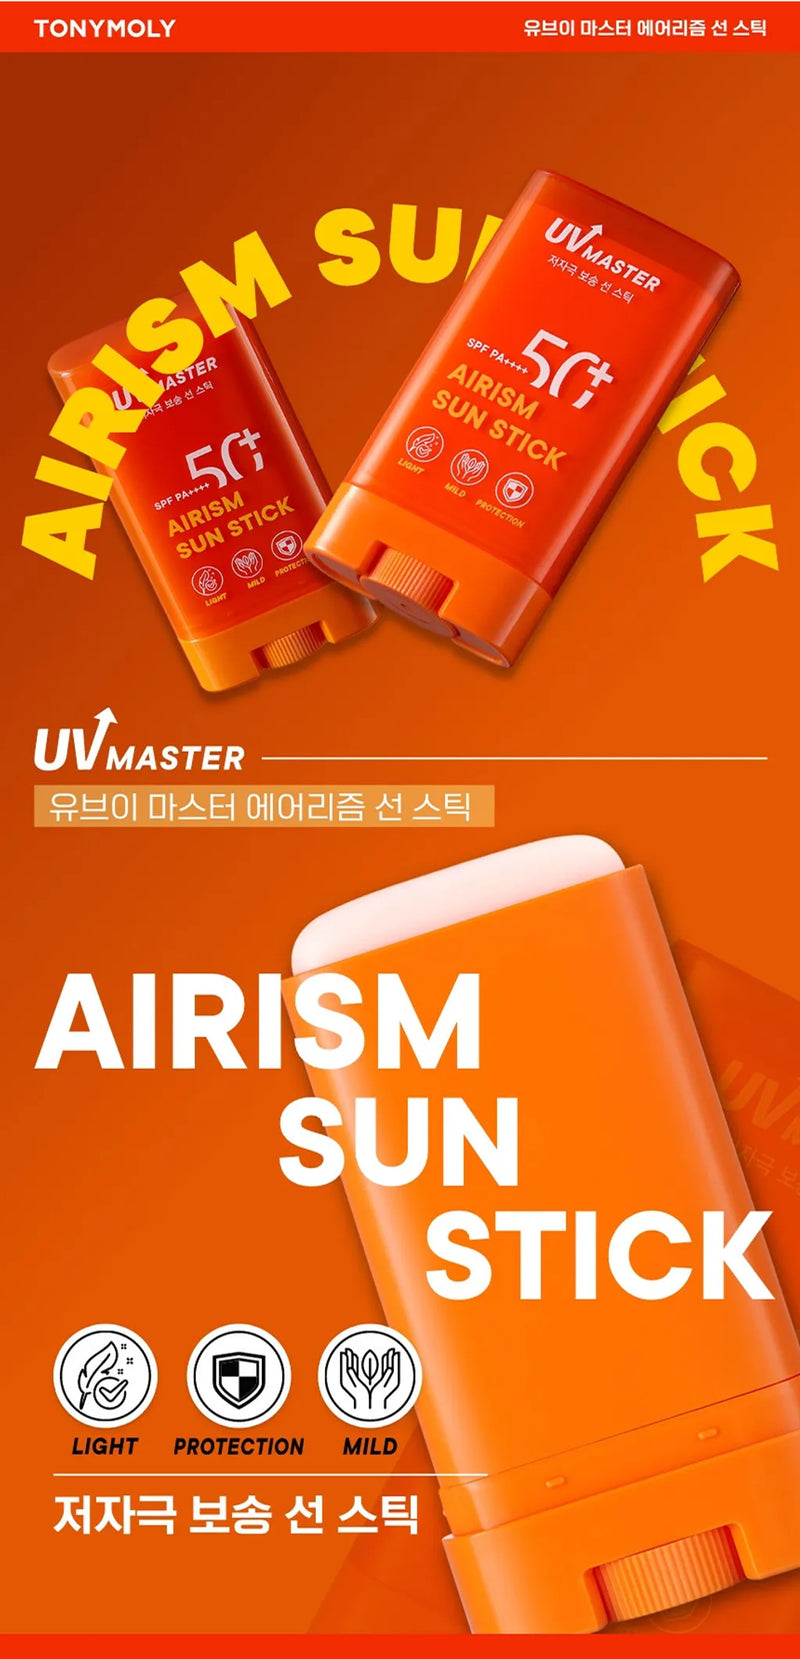 UV MASTER AIRISM SUN STICK